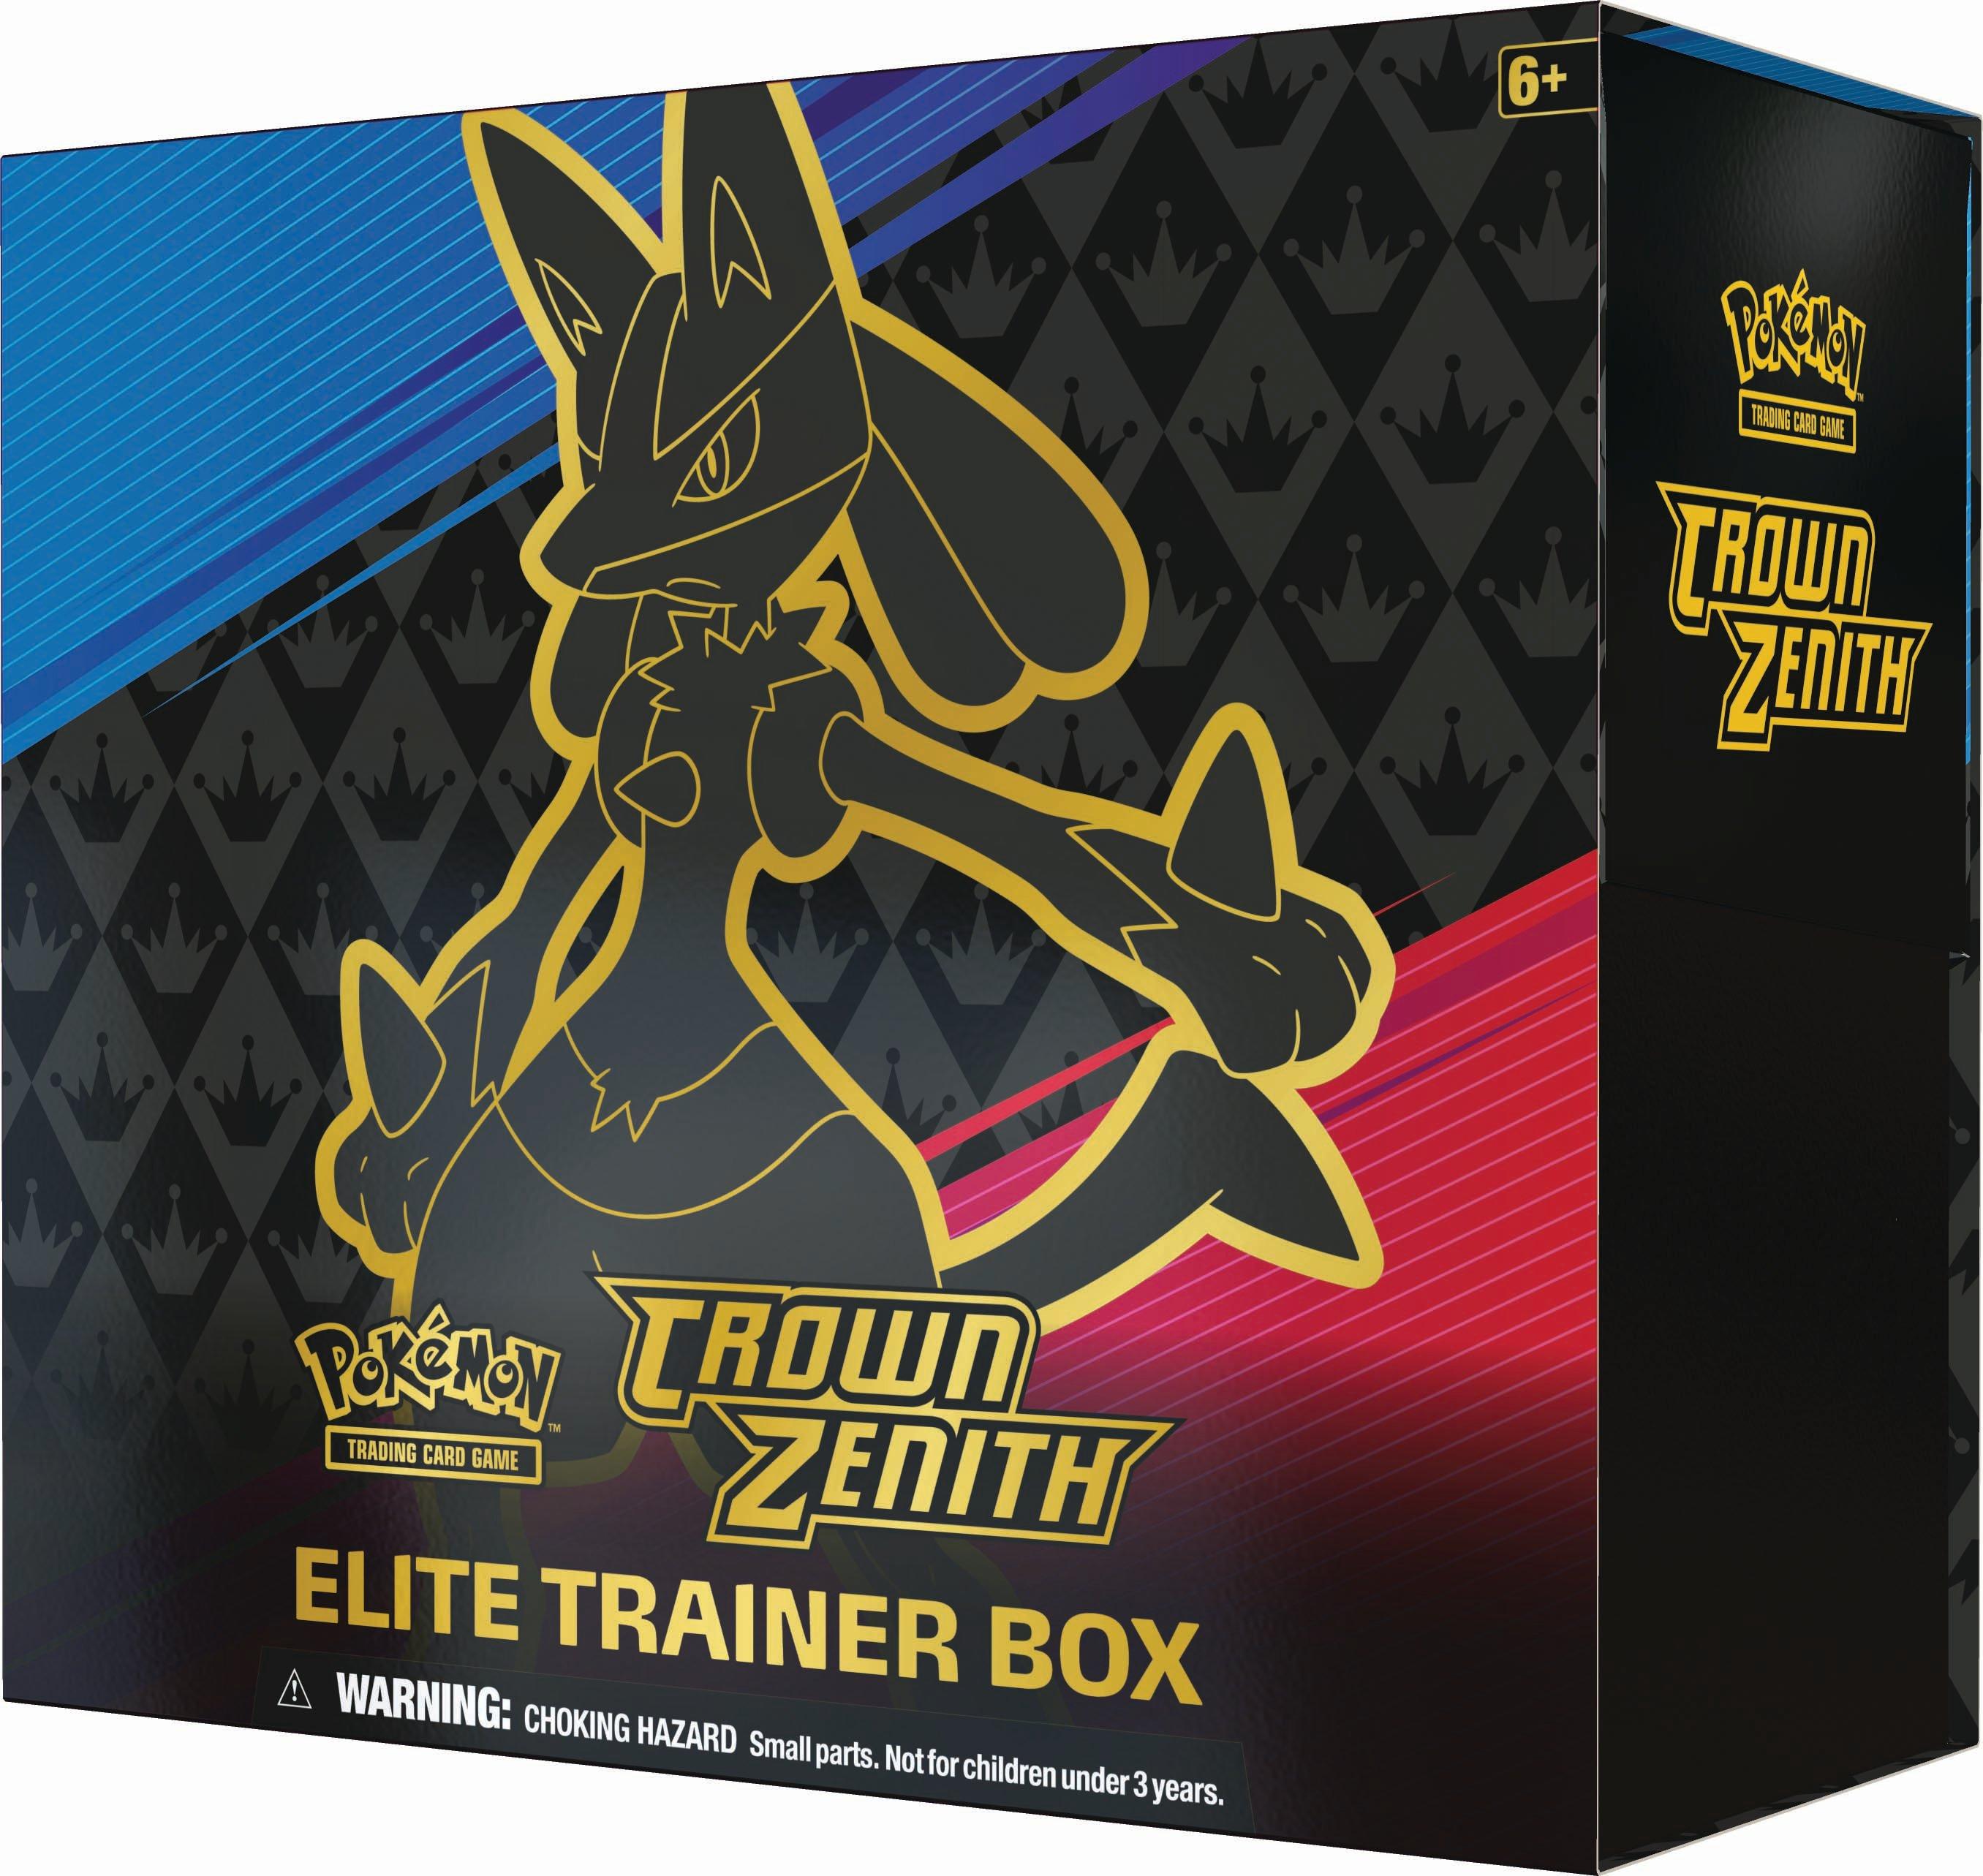 Pokémon ETB, Elite Trainer Boxes